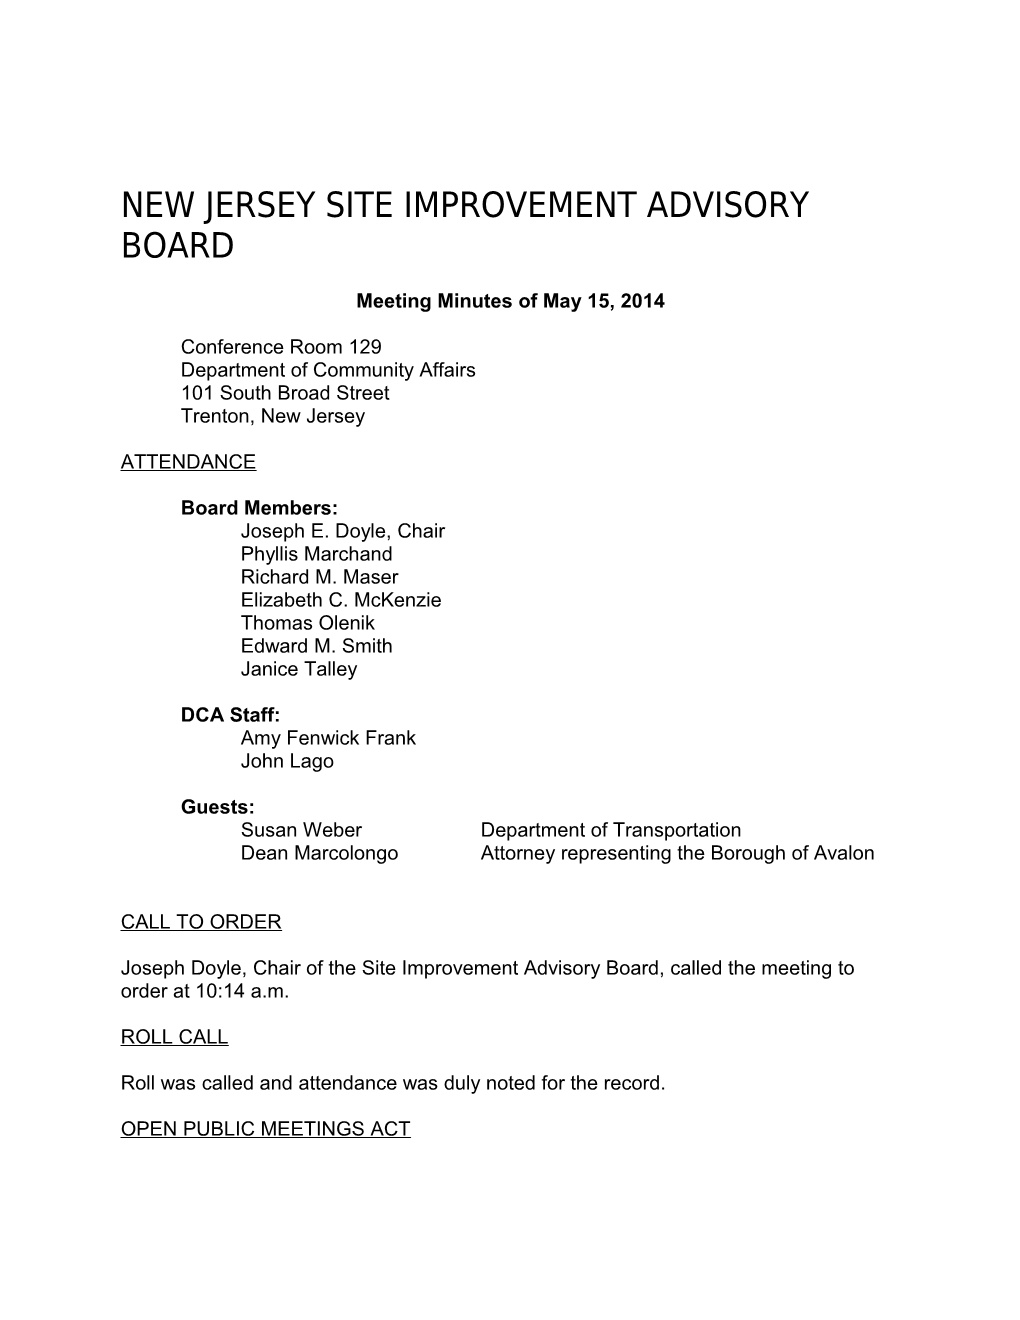 New Jersey Site Improvement Advisory Board